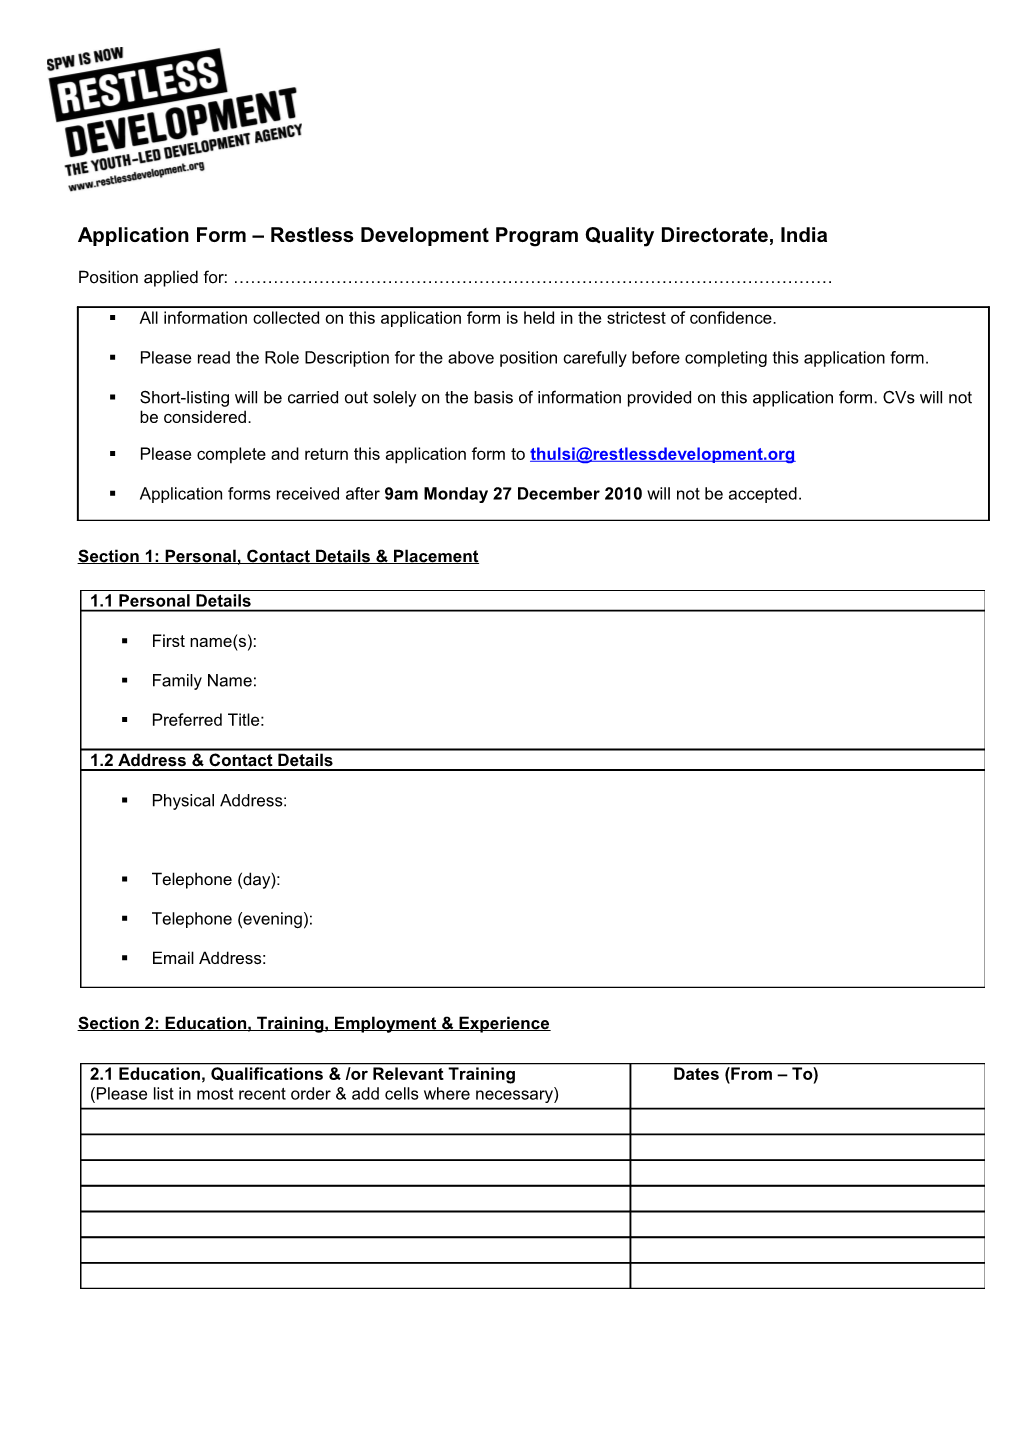 Application Form Restless Development Program Quality Directorate, India